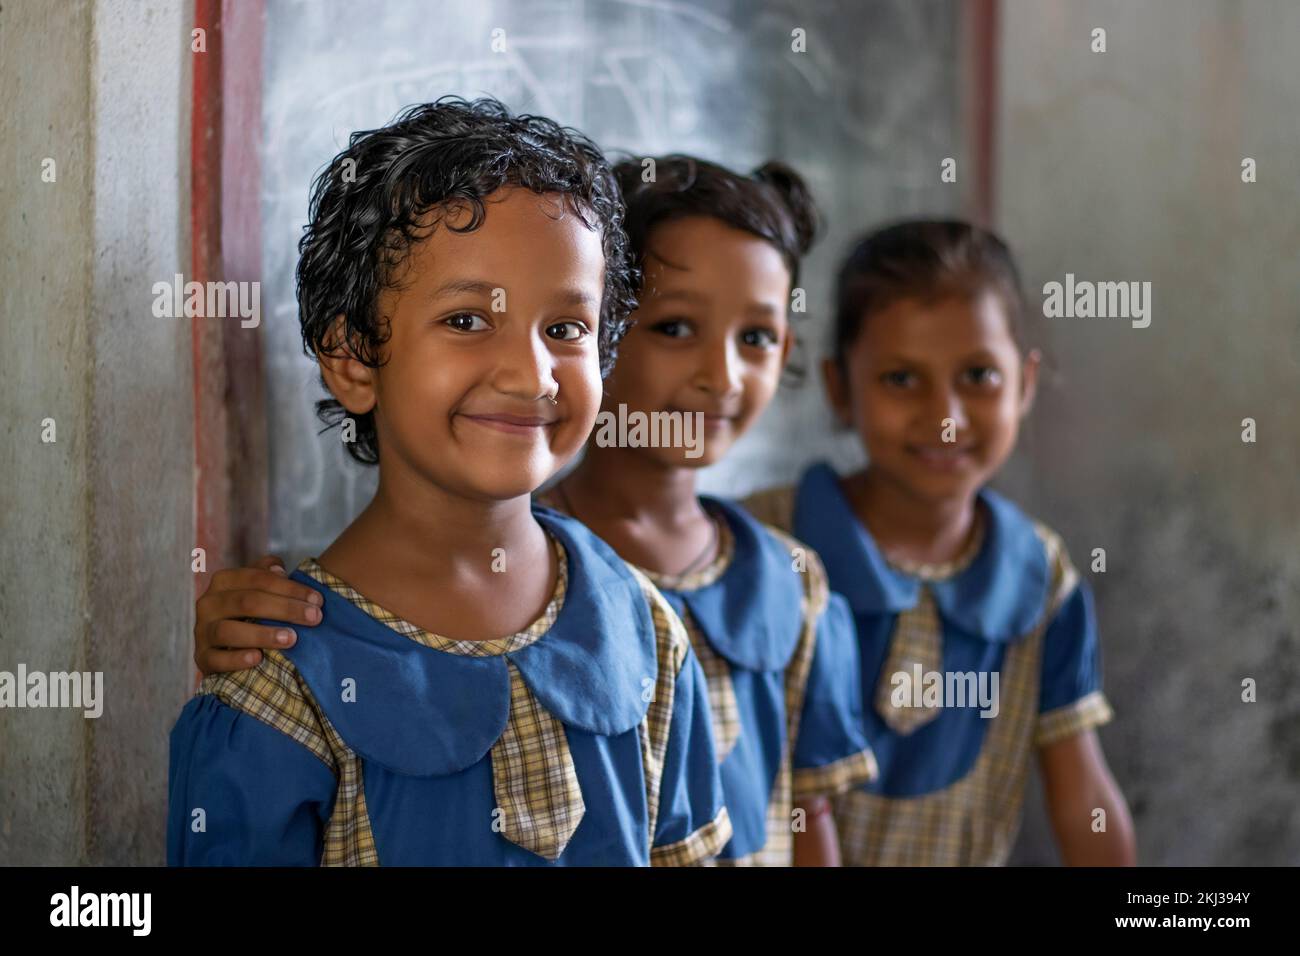 Three School Children's looking at camera at school Stock Photo